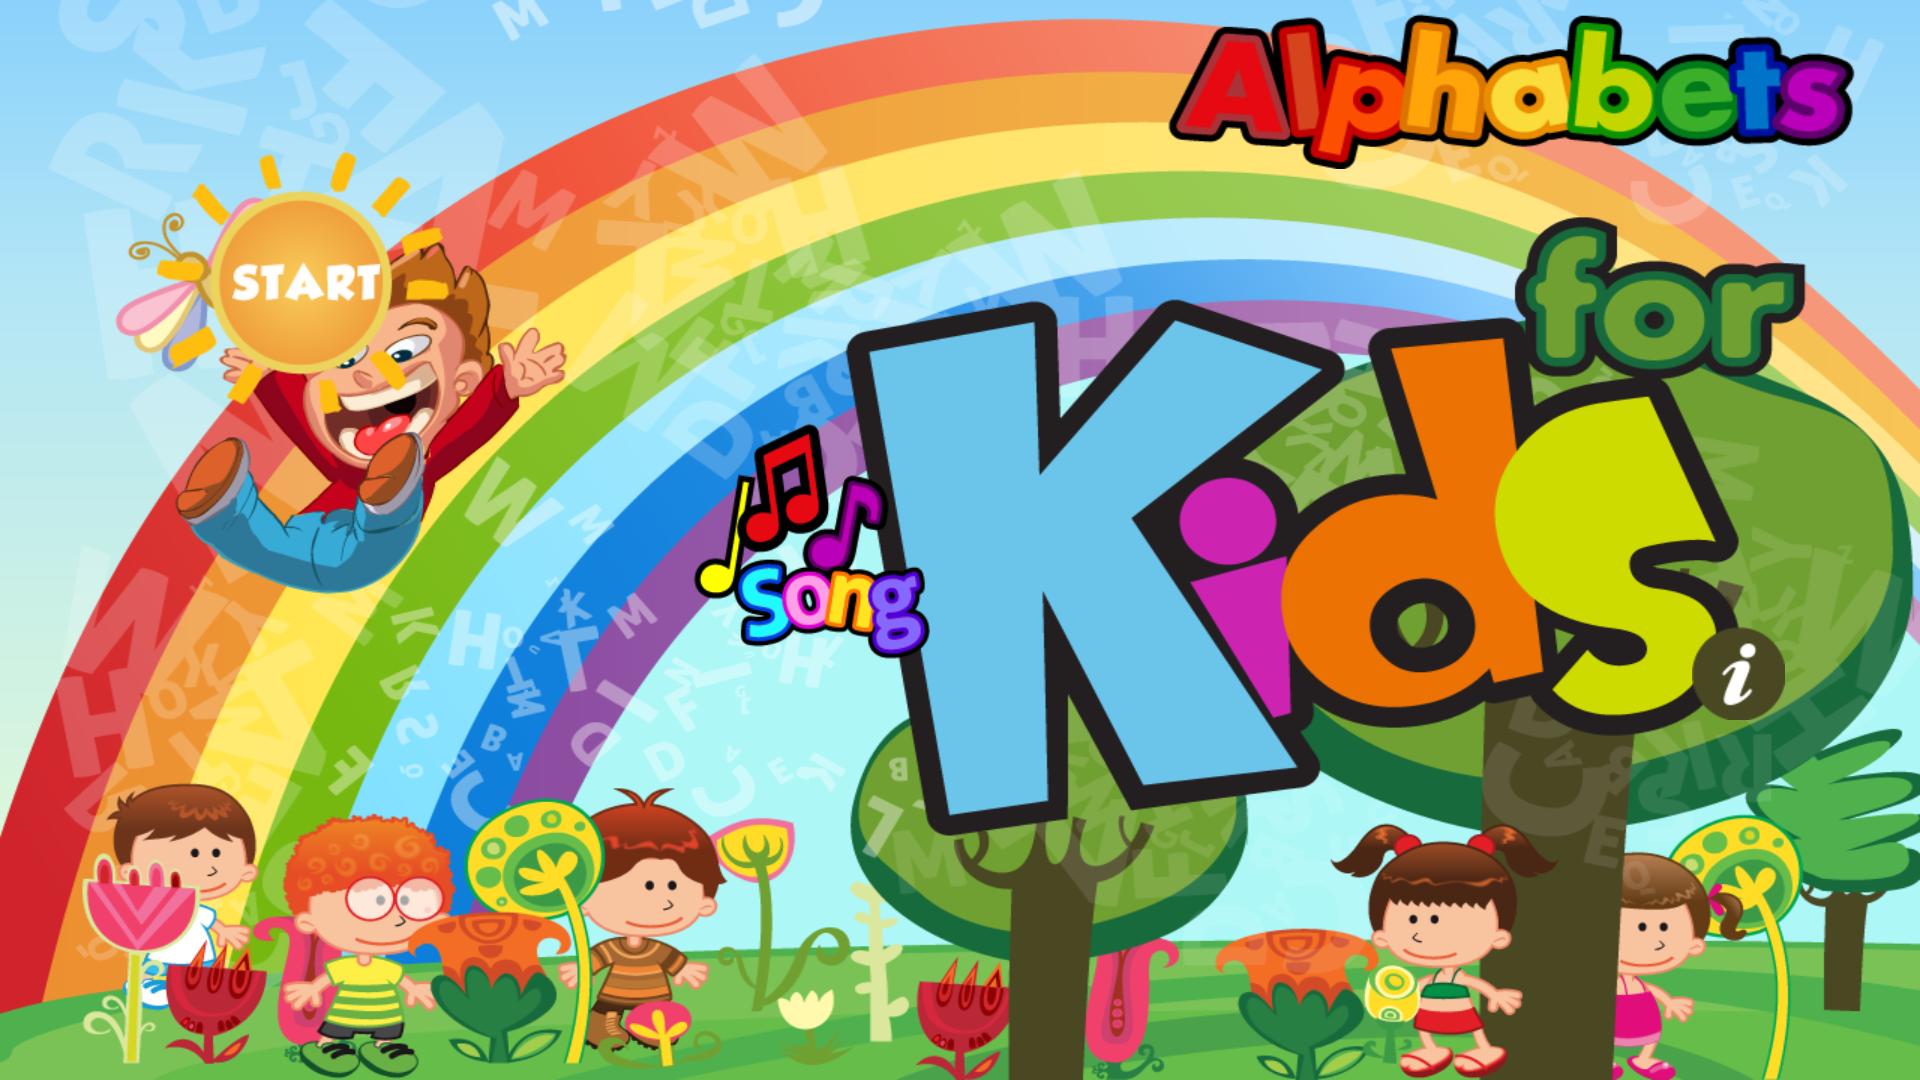 Alphabets for kids. APK untuk Unduhan Android